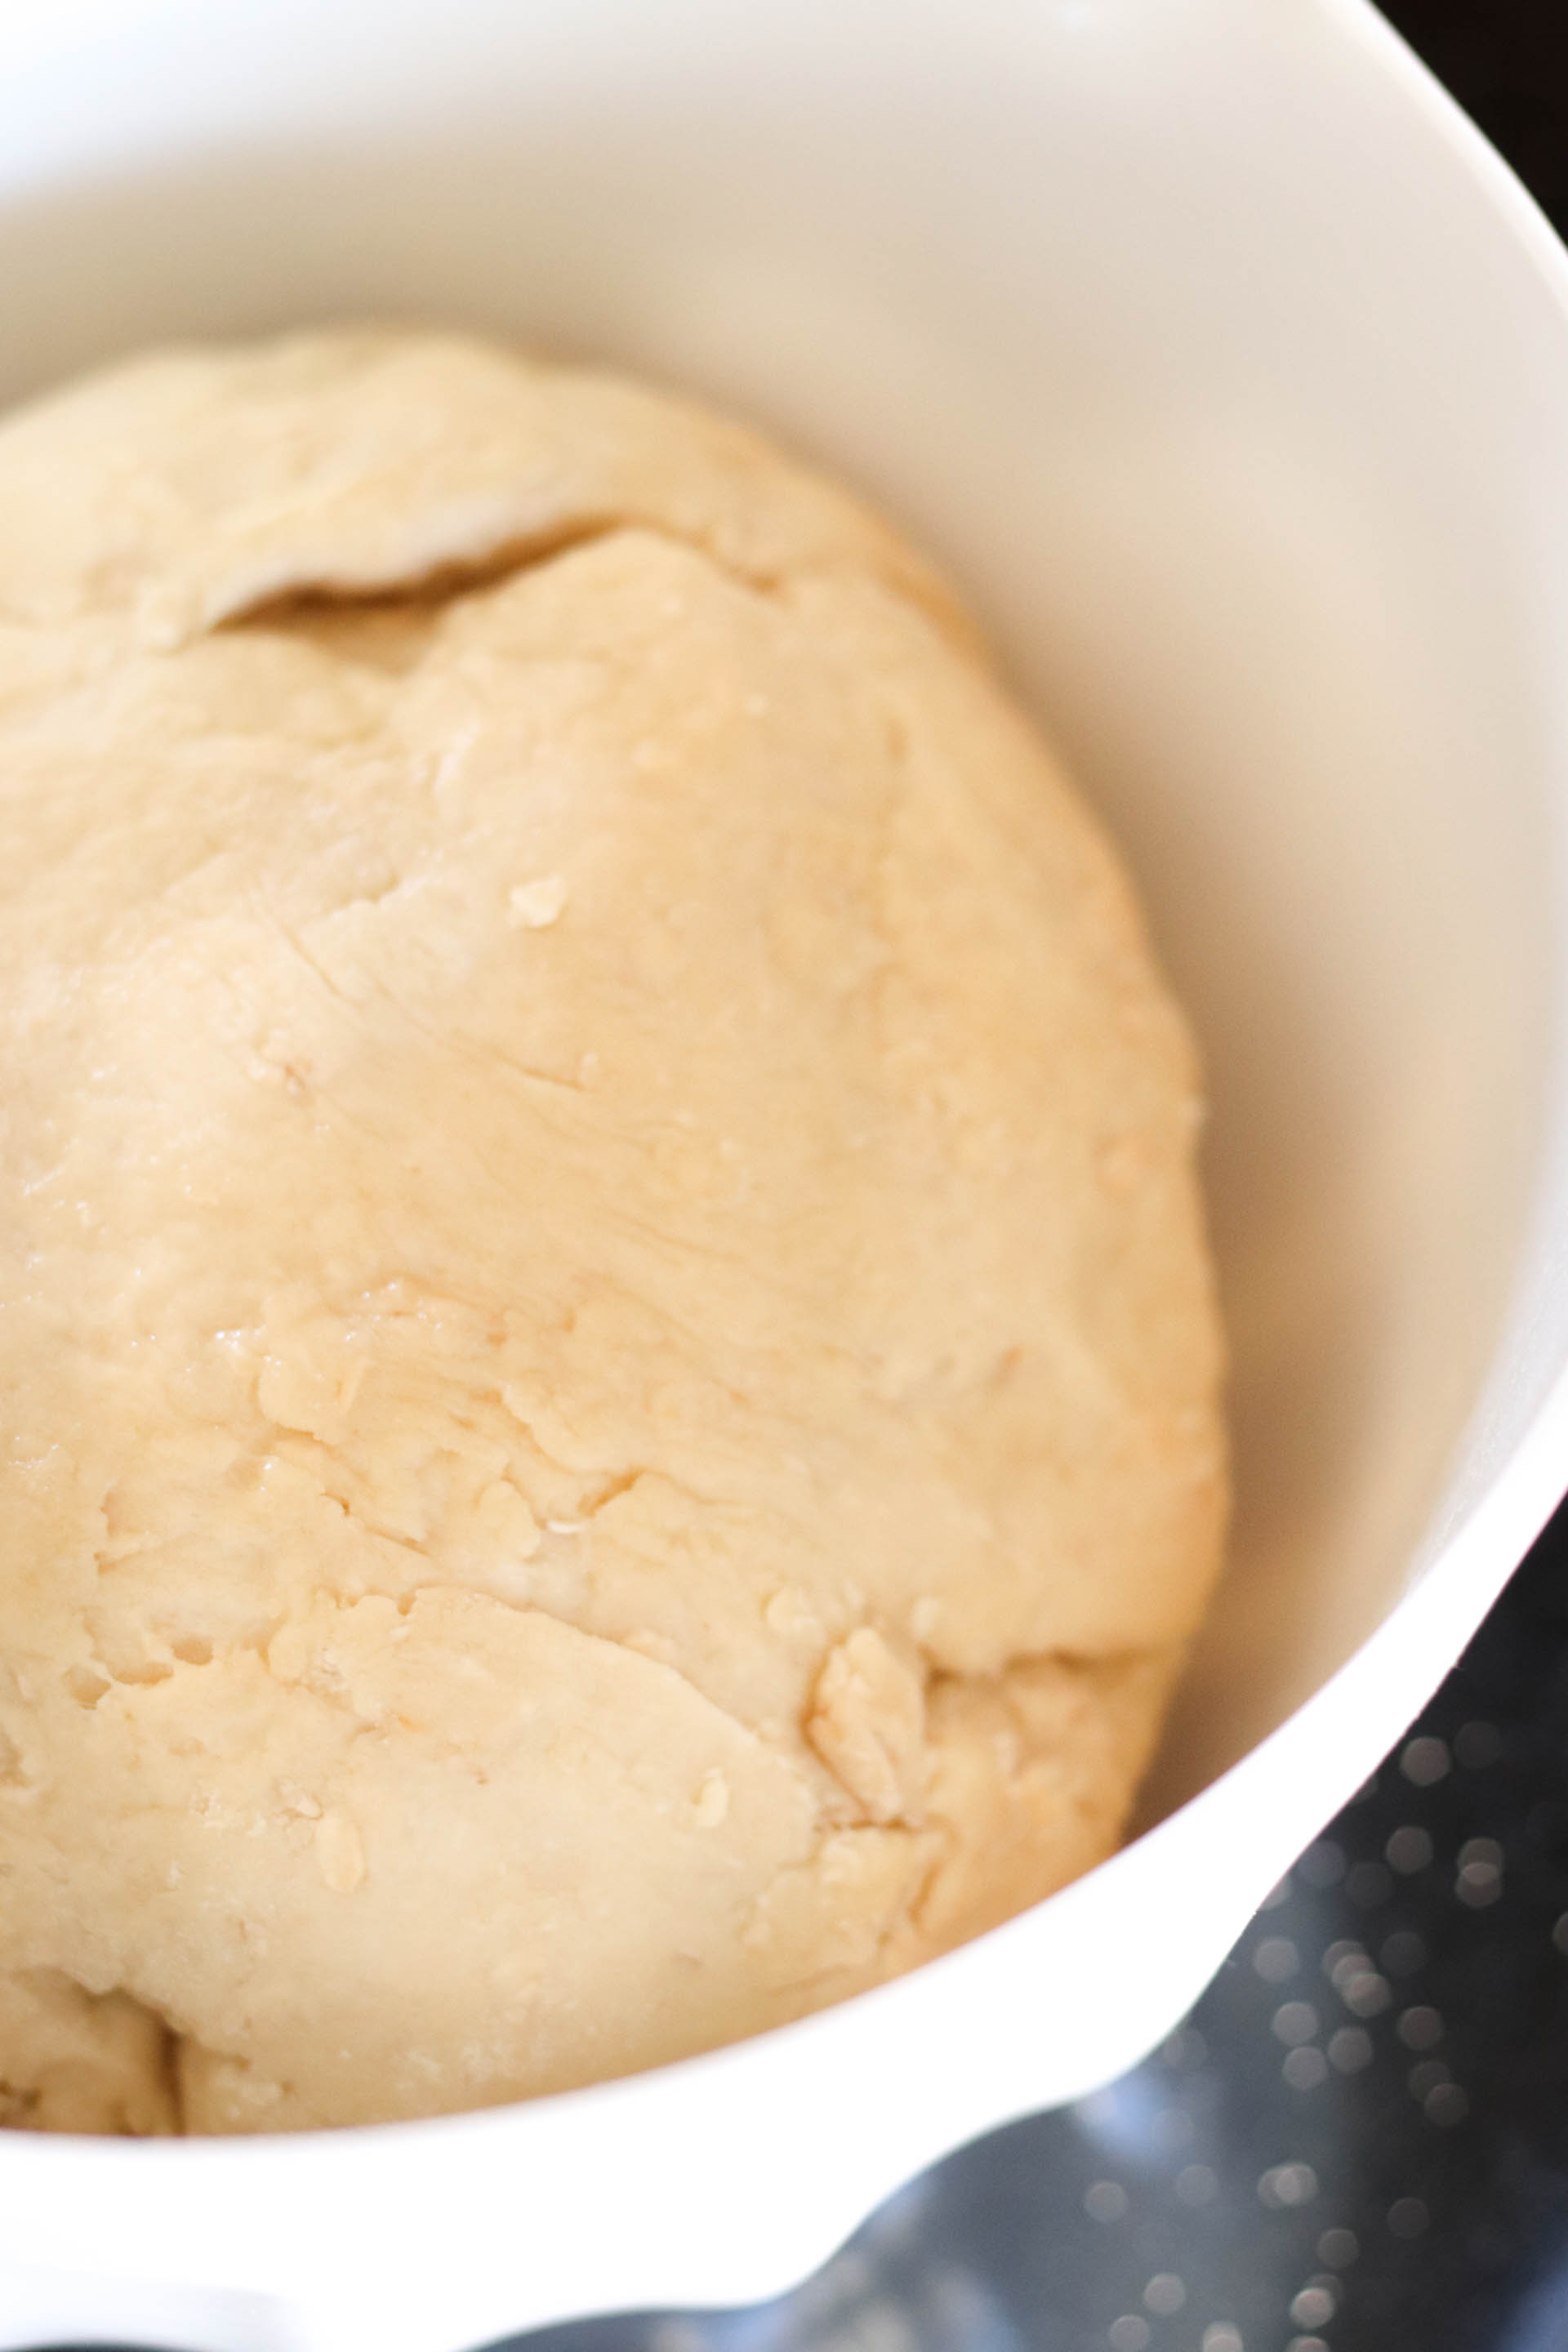 Bowl of bread dough rising